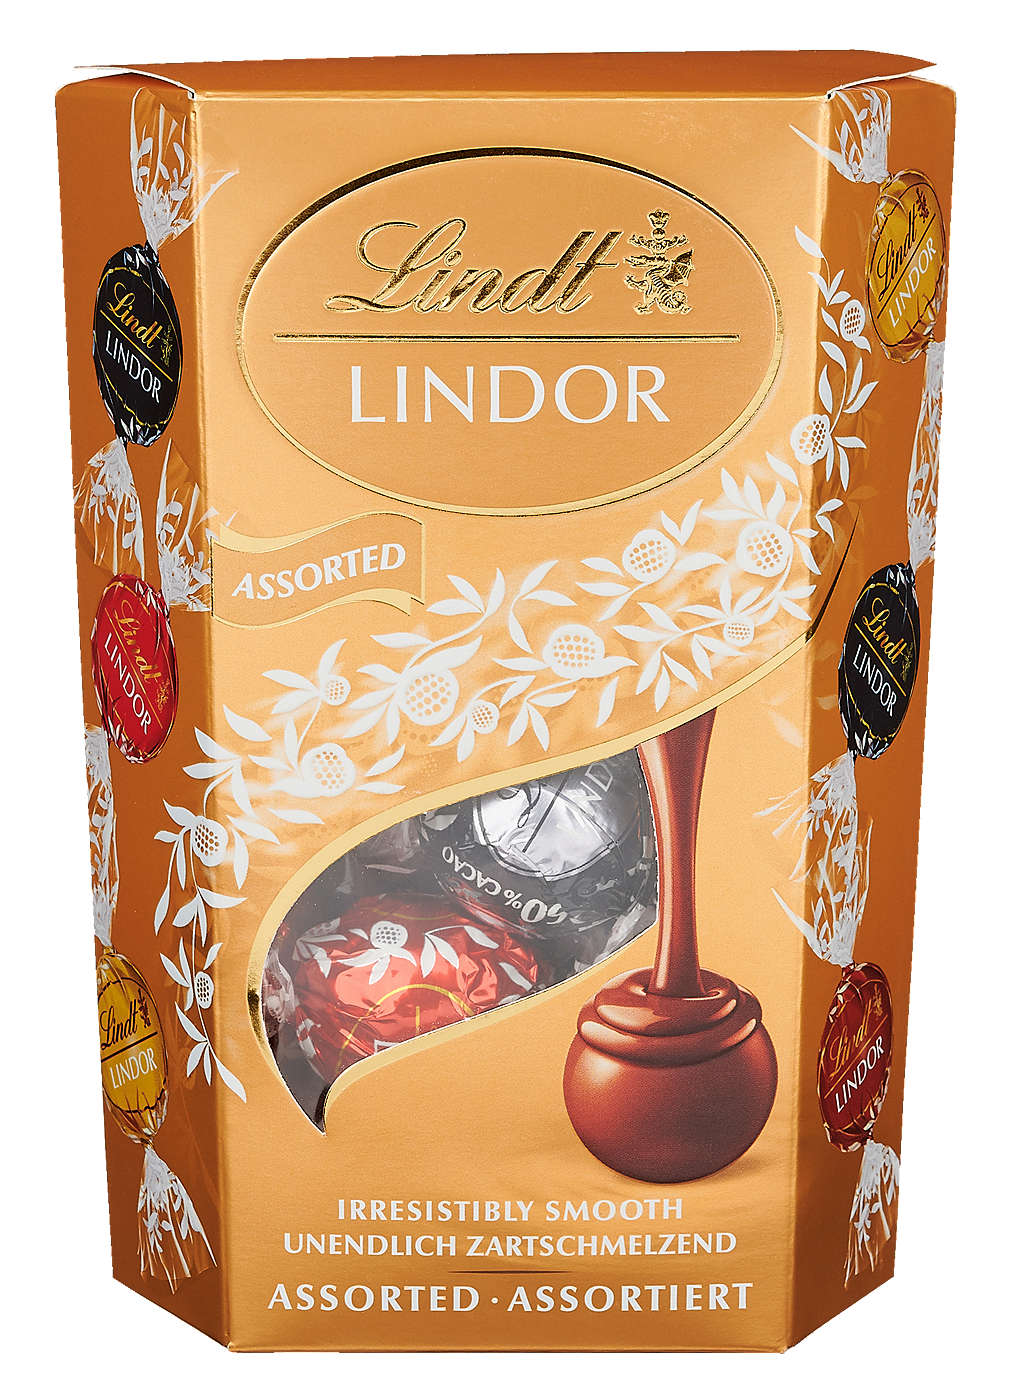 Изображение за продукта Lindt Lindor Шоколадови бонбони различни видове